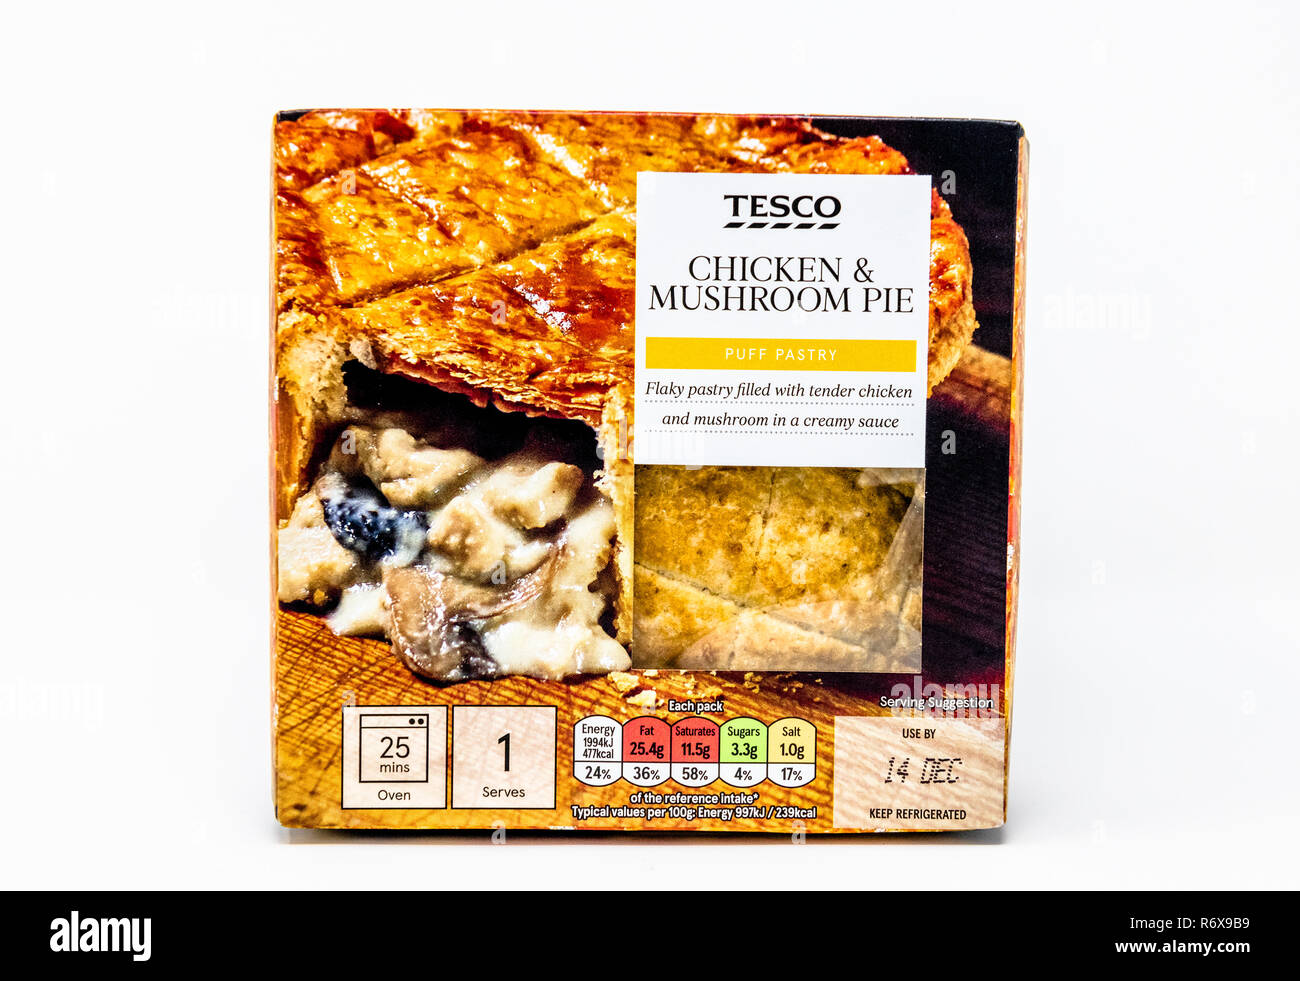 Tesco chicken and mushroom pie in its cardboard box. Stock Photo